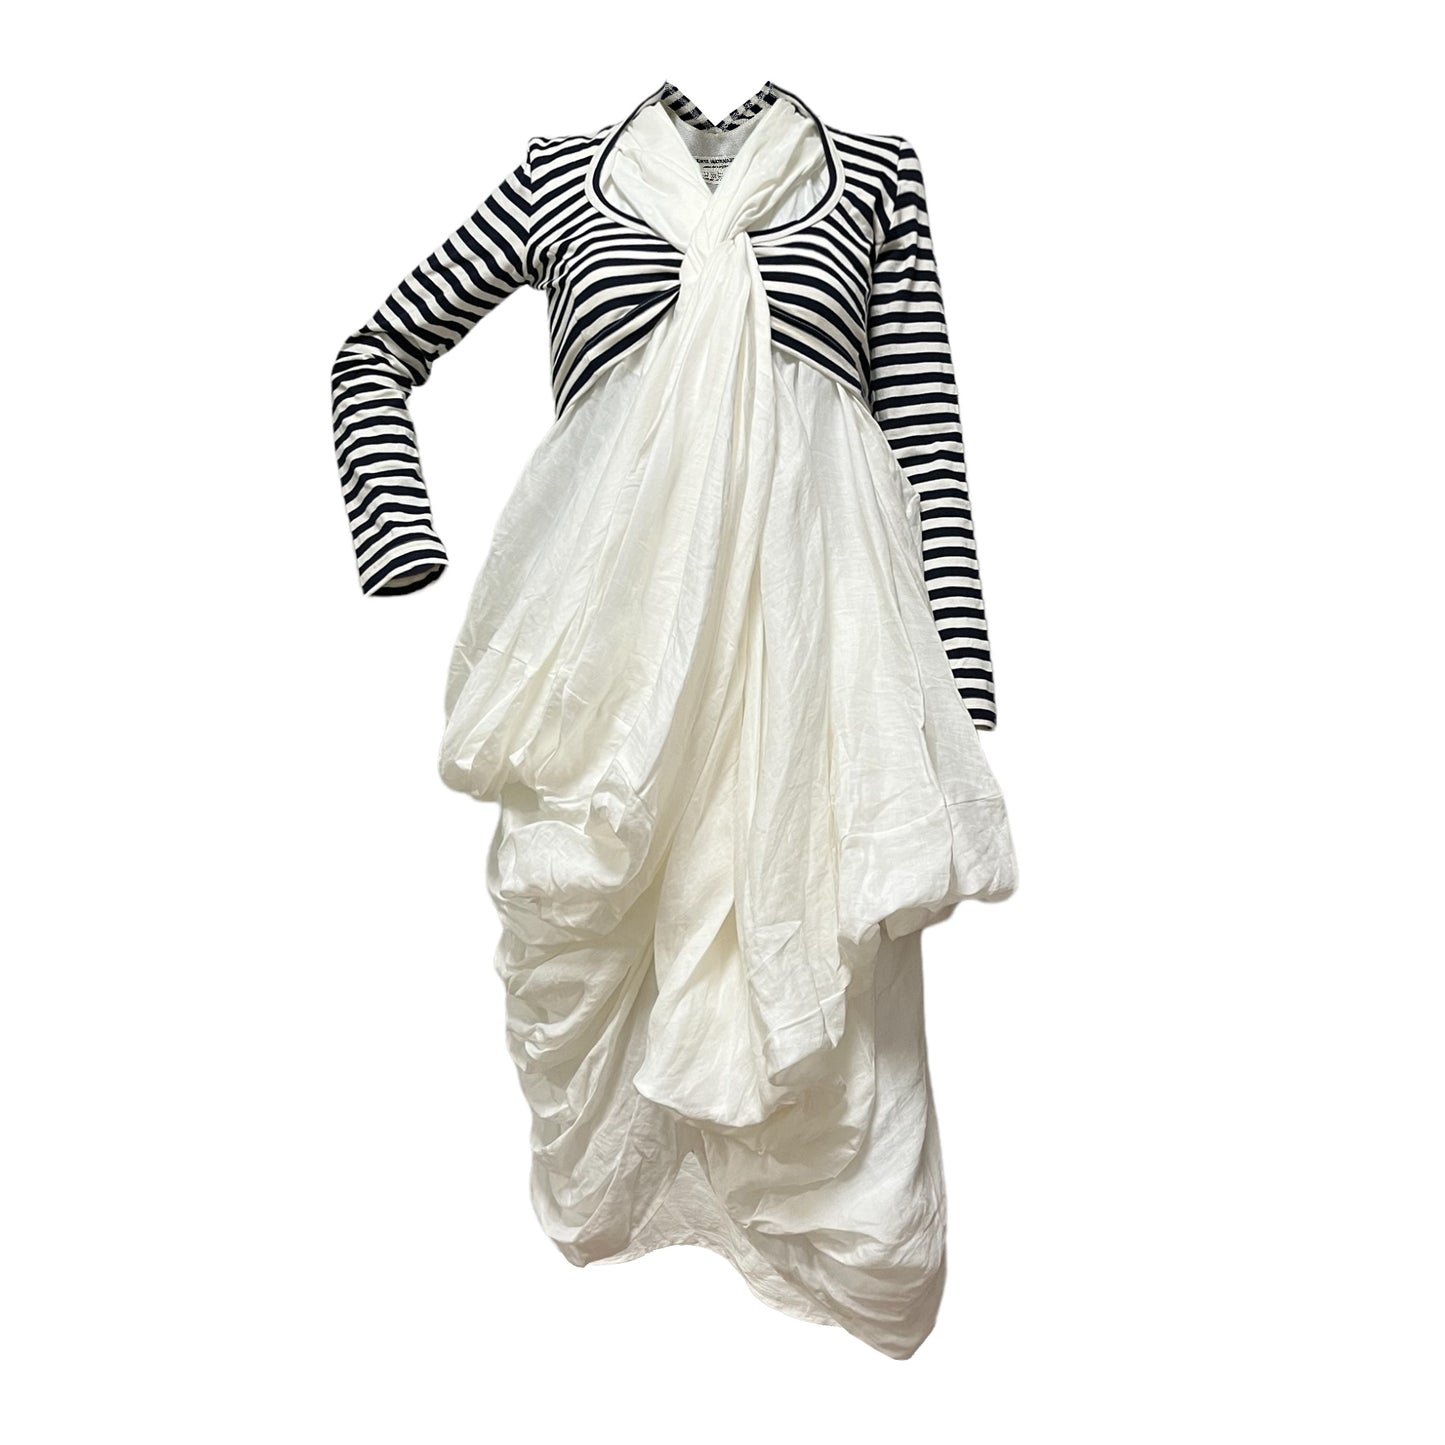 JUNYA WATANABE Spring Summer 2011 Striped Asymmetric Dress